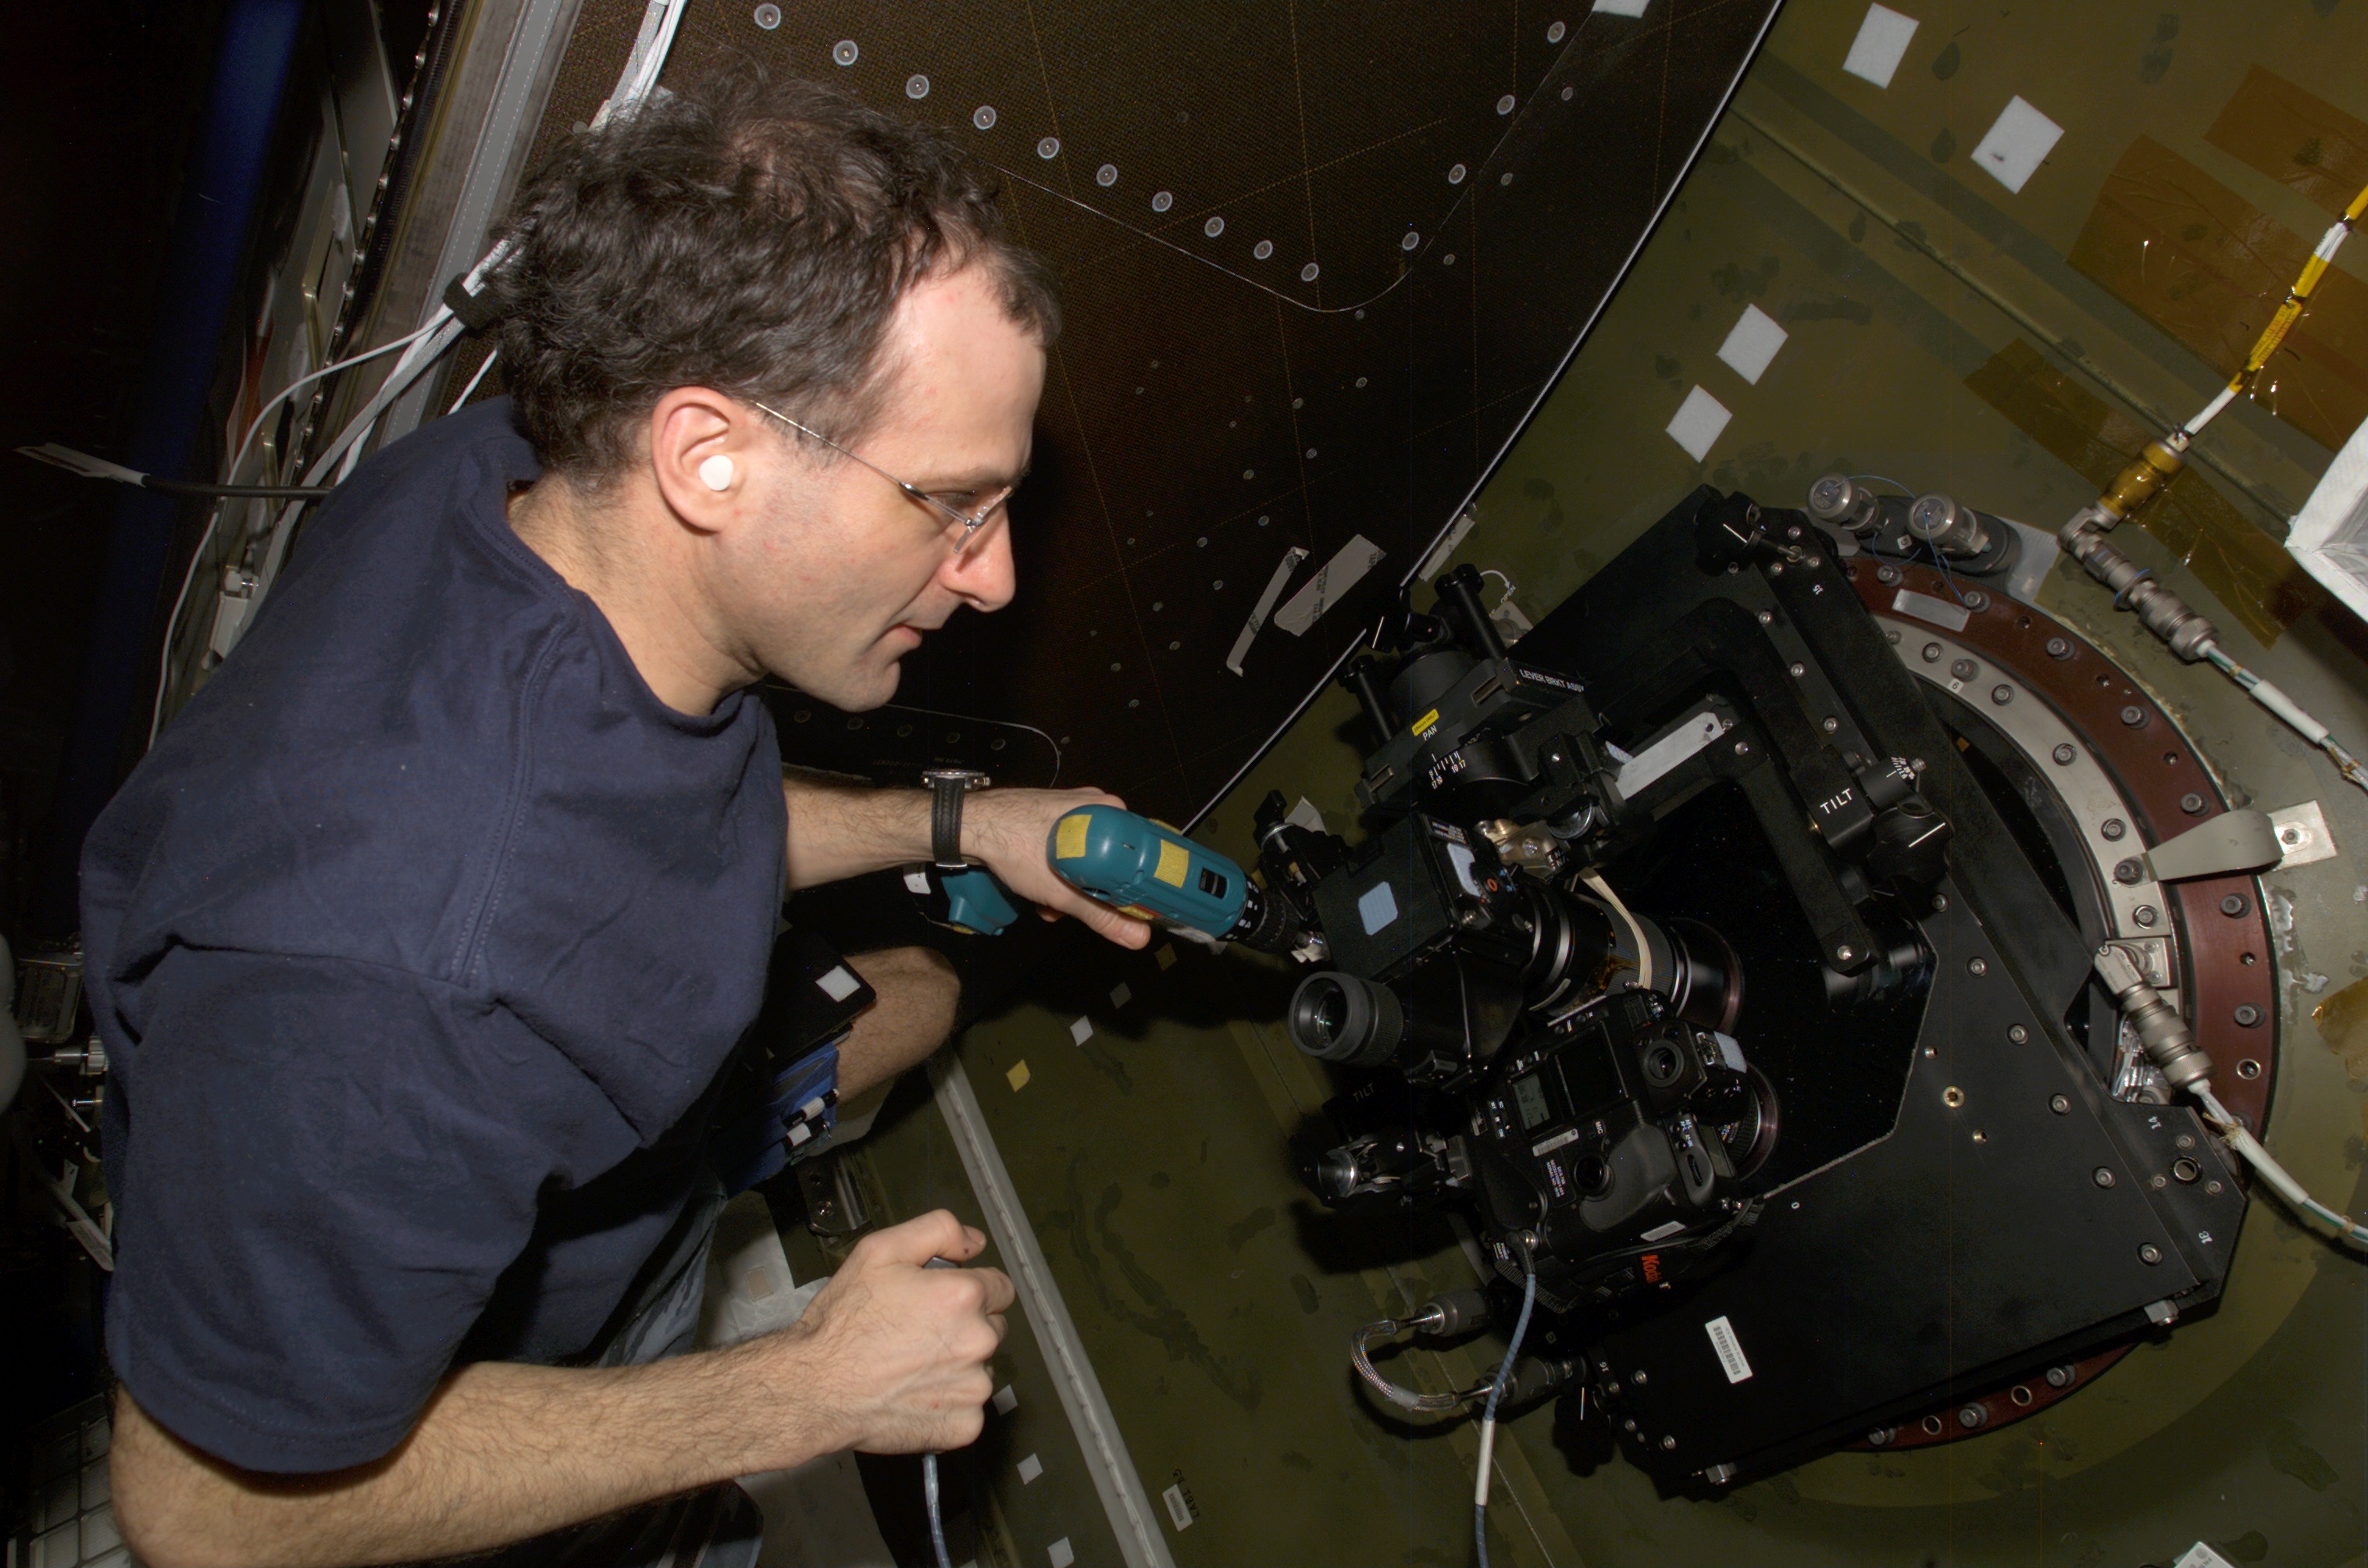 Don pettit operates barn door tracker aboard ISS